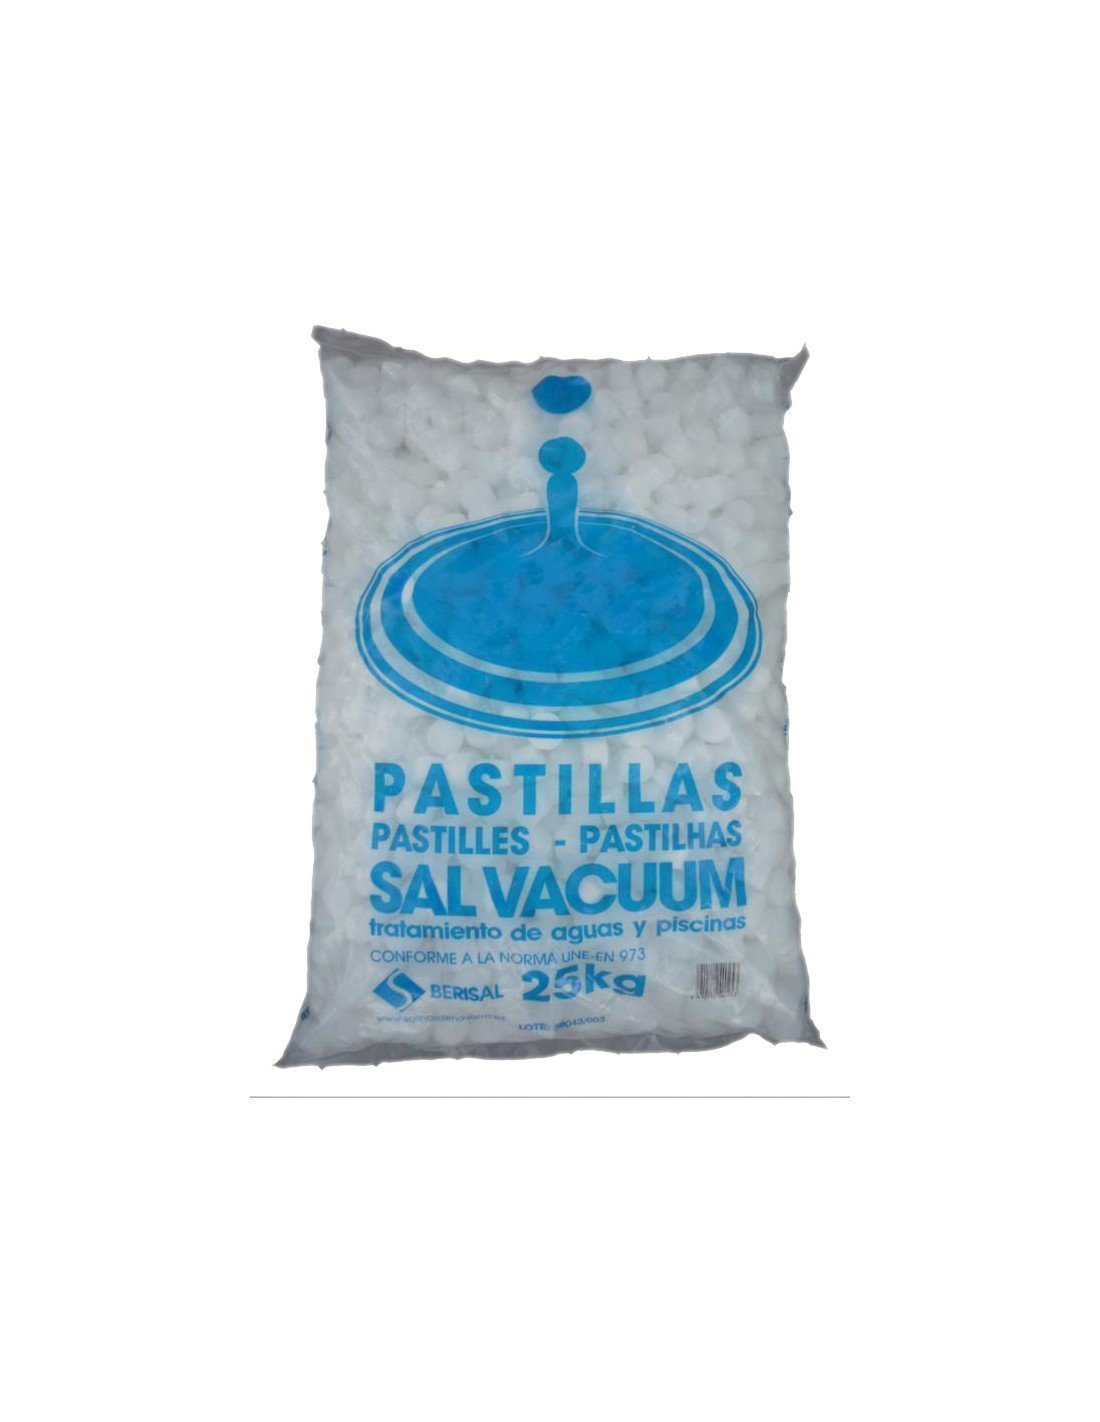 Sal para Descalcificador, Sal en tabletas, Sal Mineral, Sal para